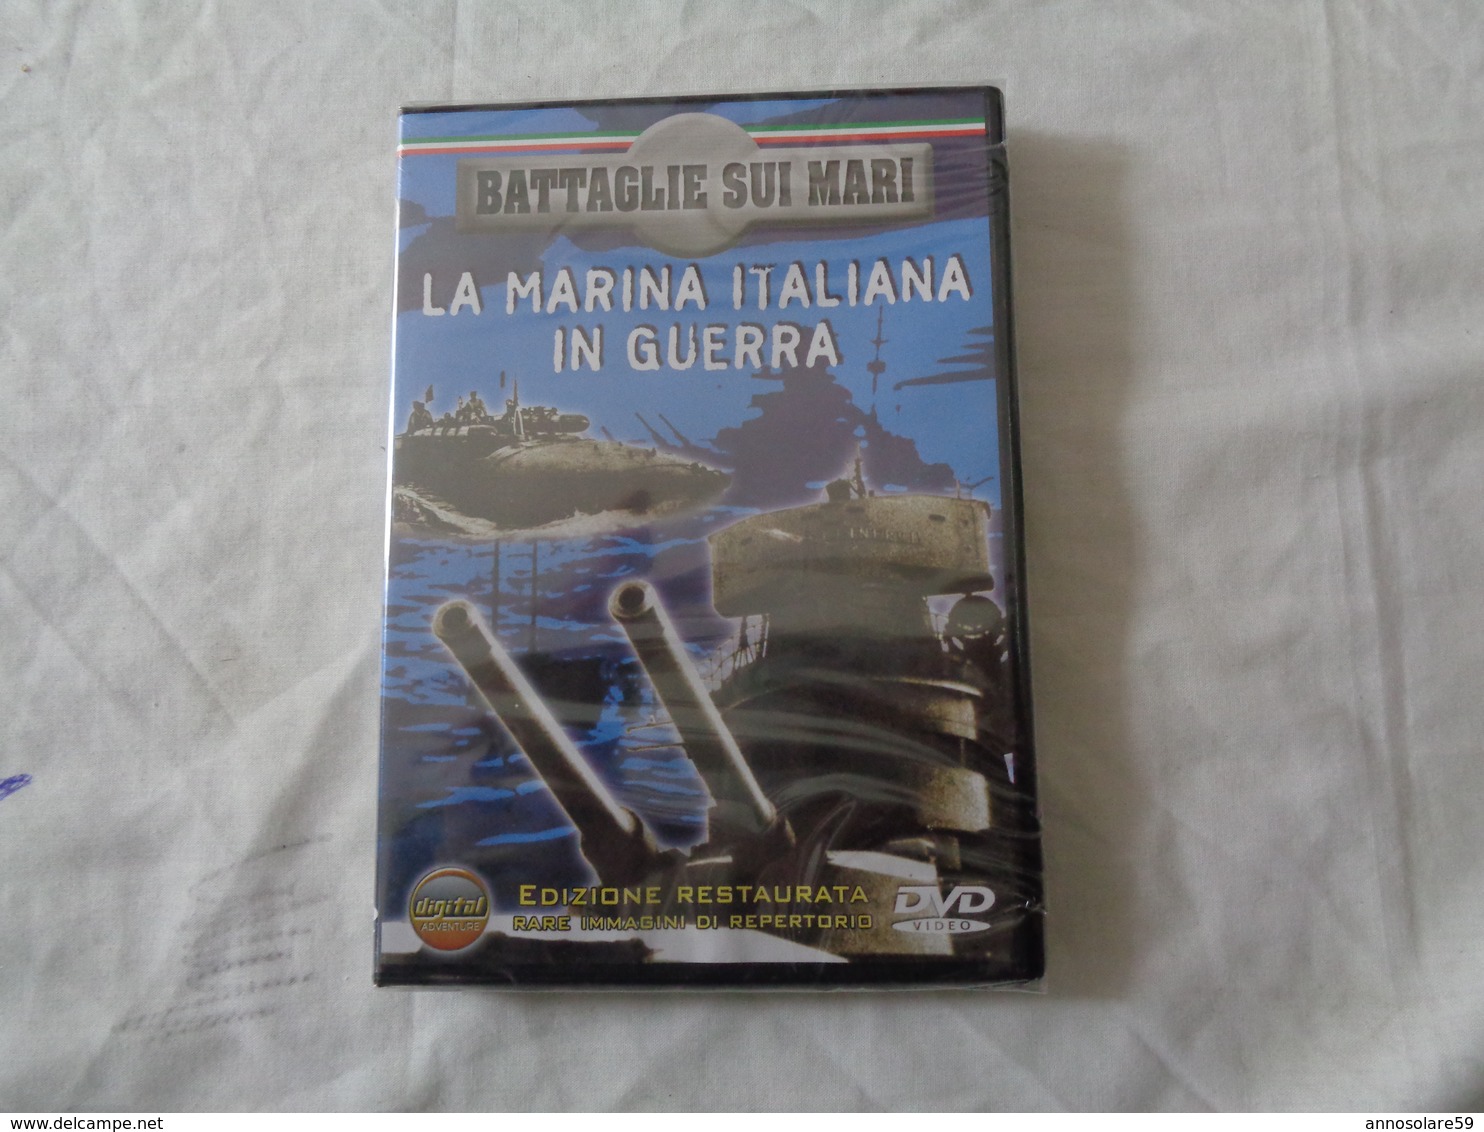 DVD VIDEO: LA MARINA ITALIANA IN GUERRA (BATTAGLIE SUI MARI) DOCUMENTARIO - SIGILLATO - LEGGI - Music On DVD